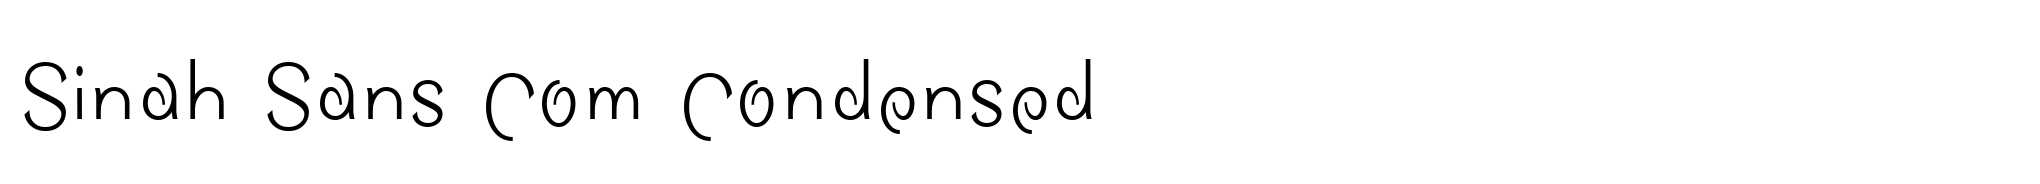 Sinah Sans Com Condensed image